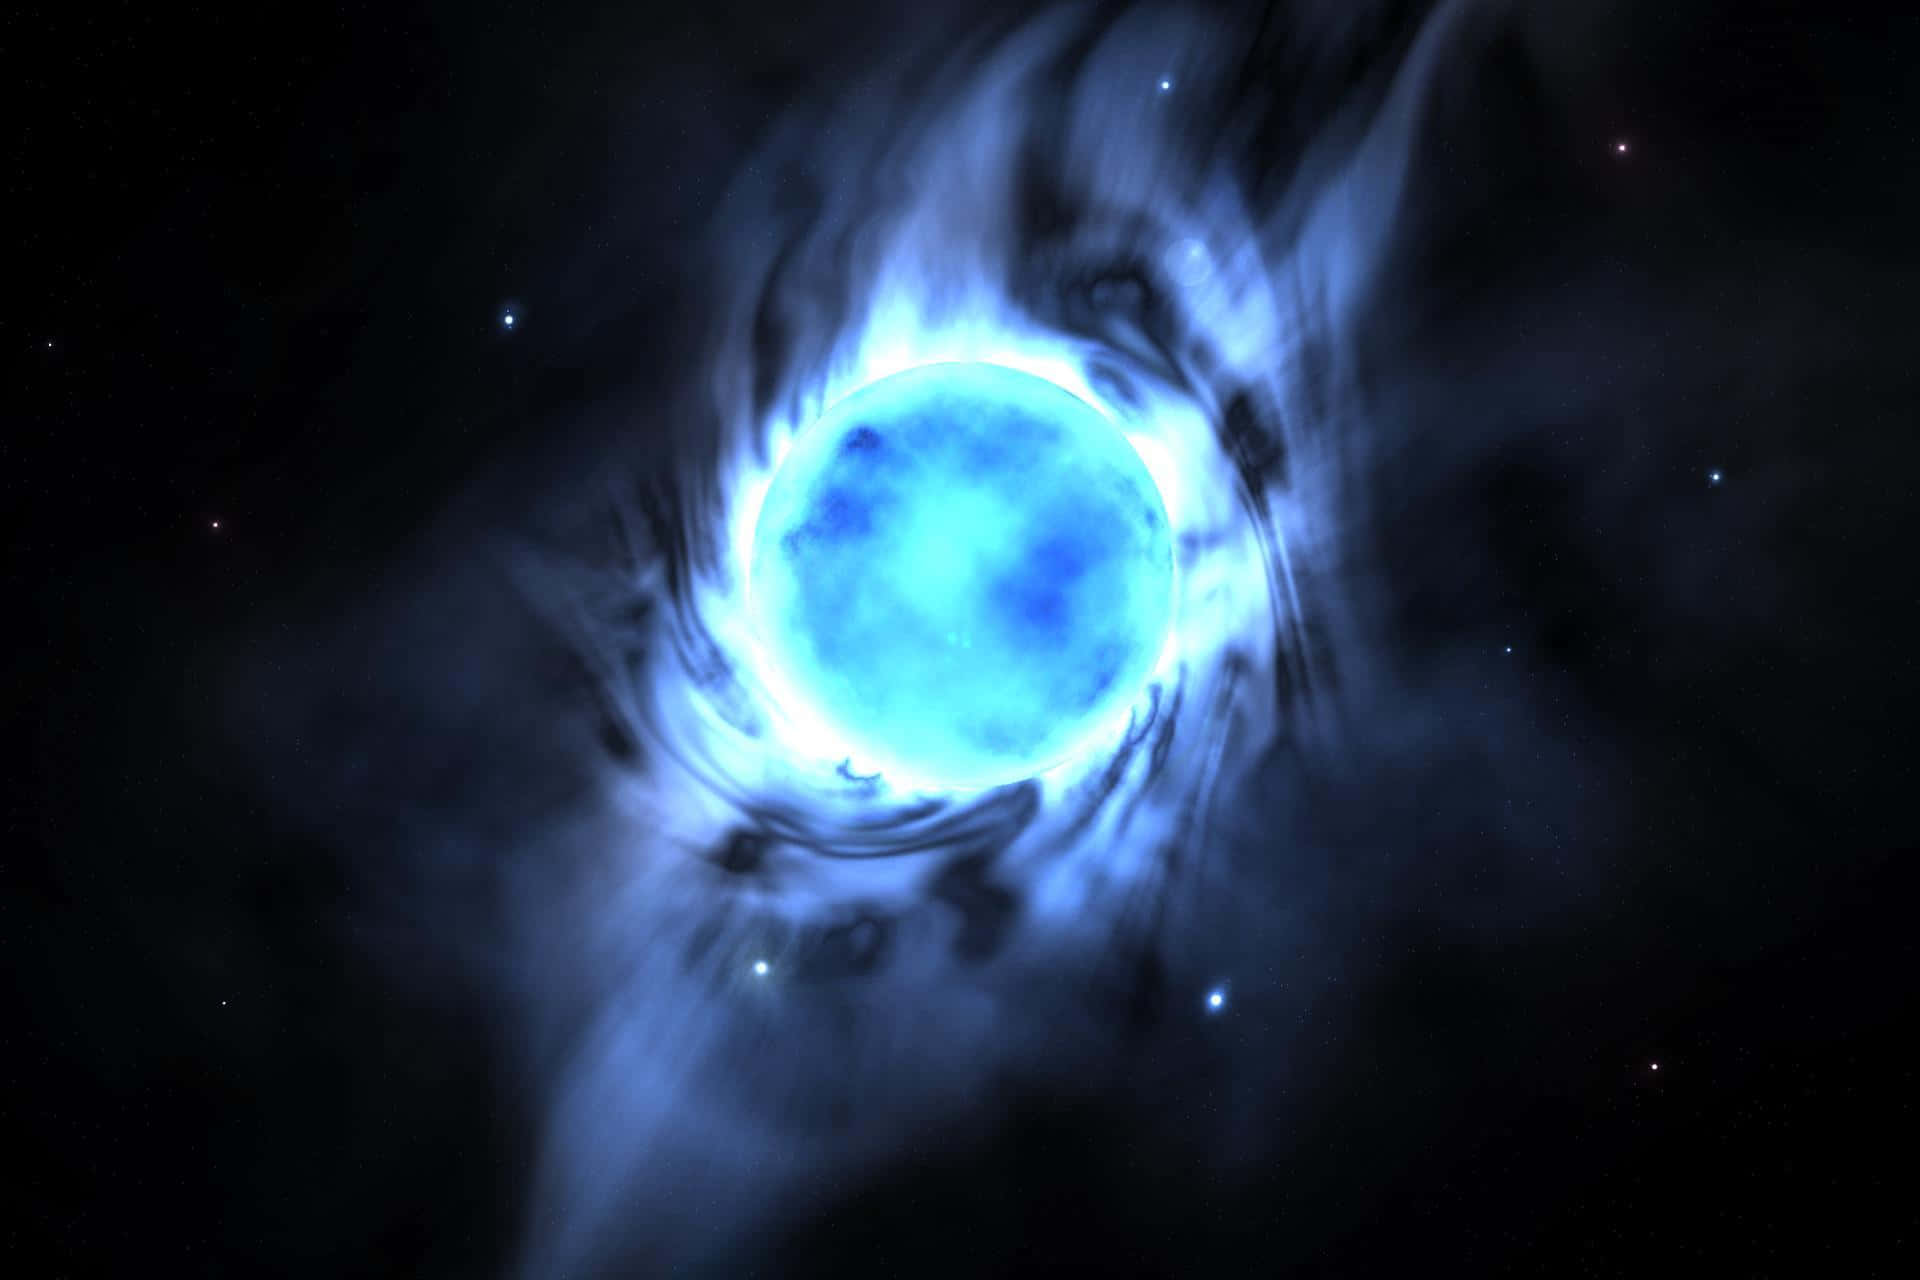 A fiery illustration of a breathtaking supernova